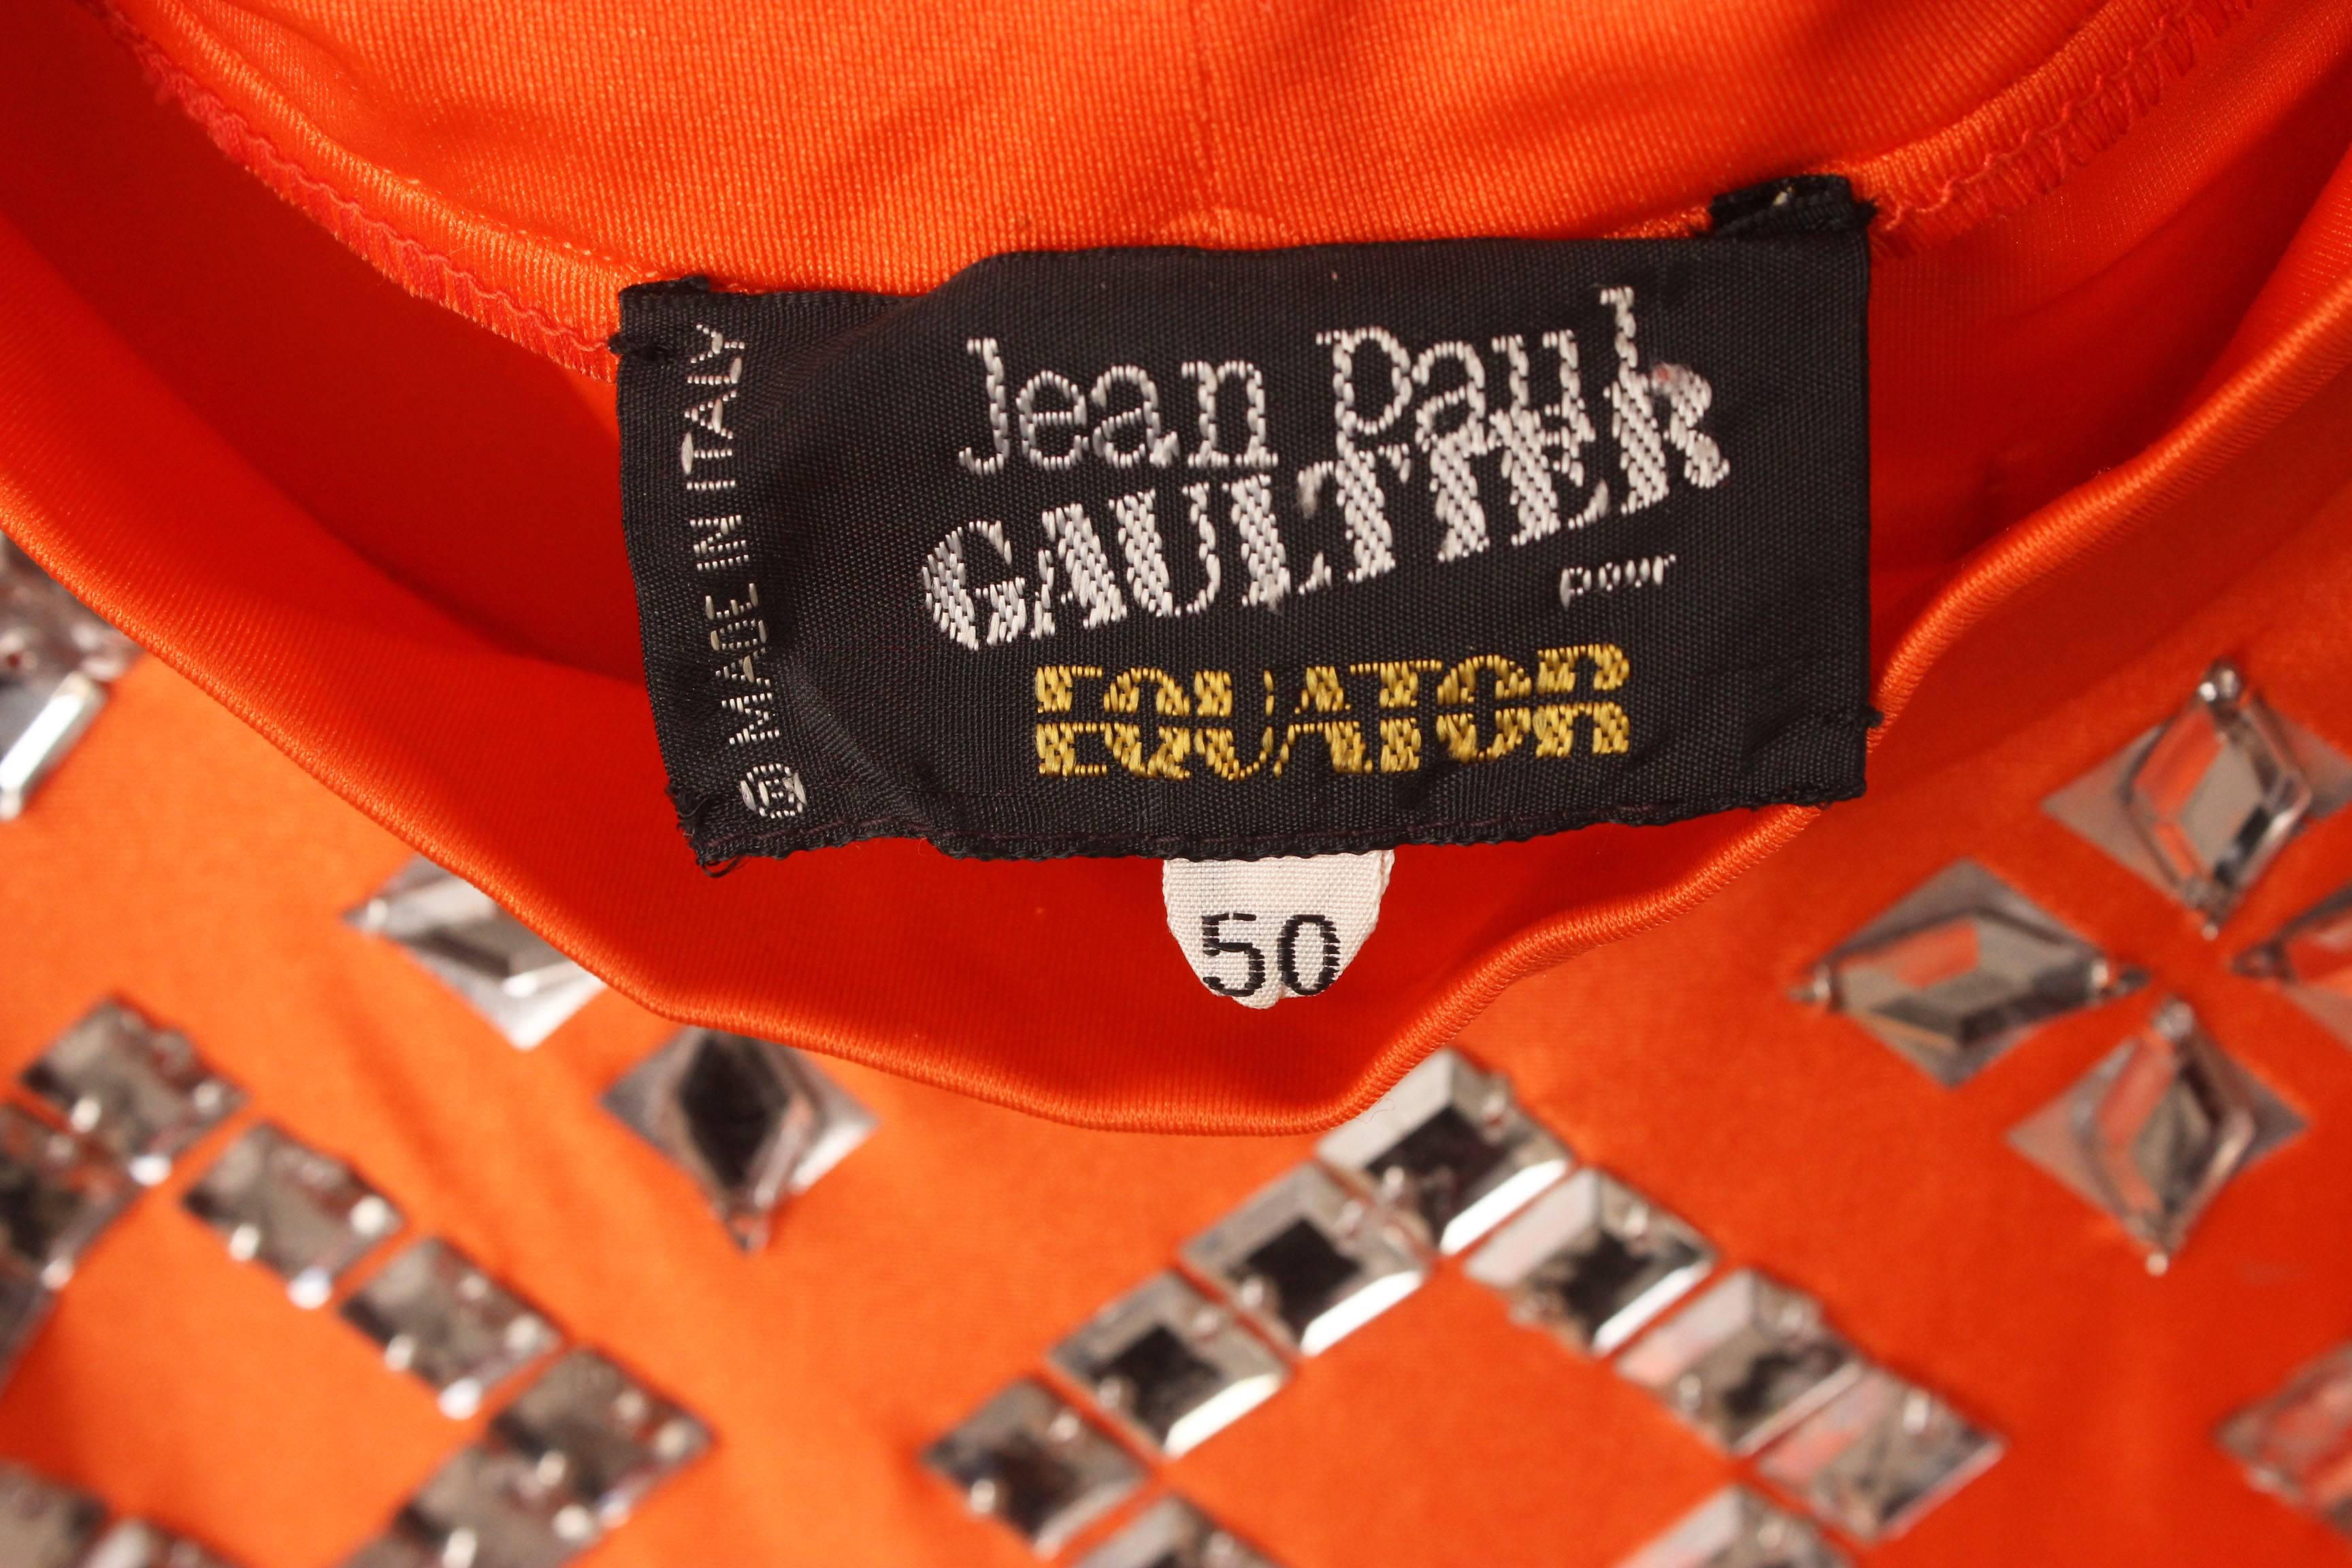 Jean Paul Gaultier Vintage Tangerine Mirrored Top For Sale 1